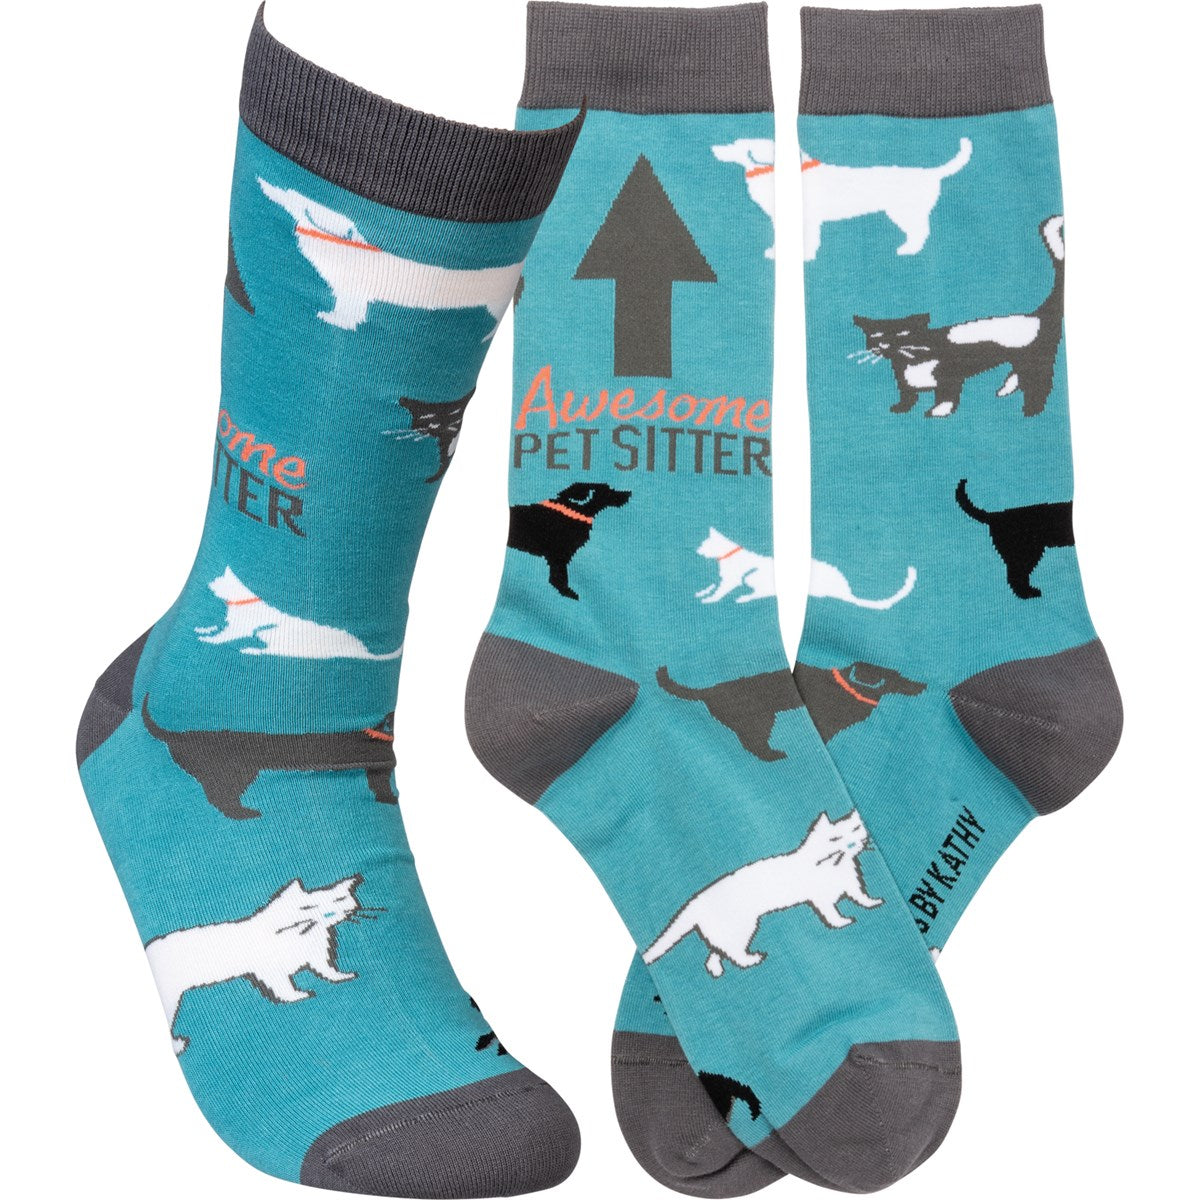 Awesome Pet Sitter Unisex Fun Socks